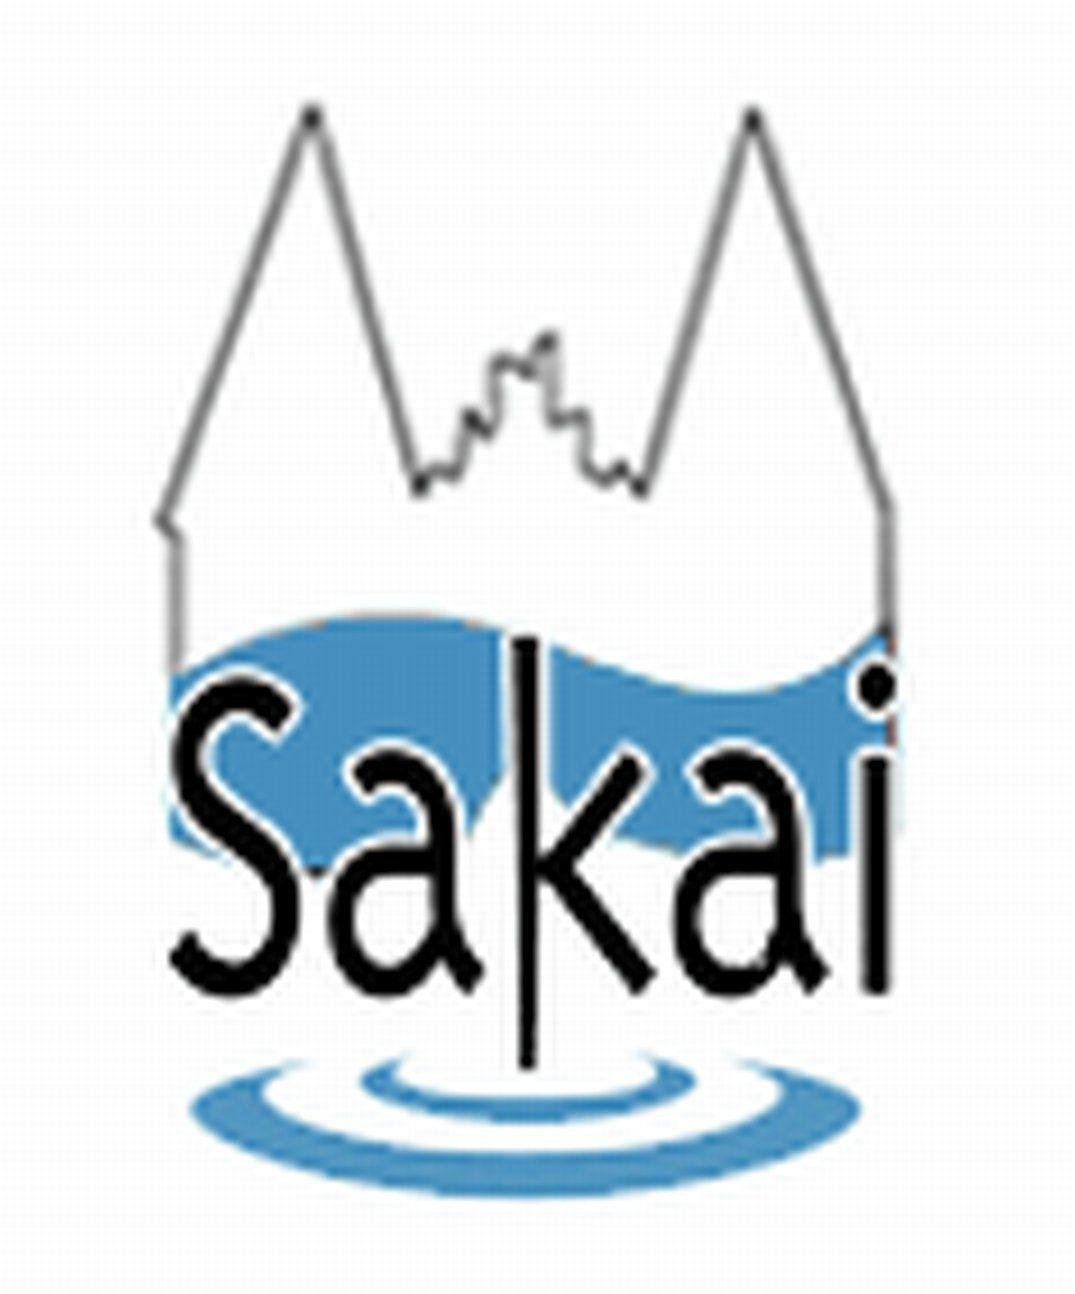 Sakai Logo - Event review: Sakai day Europe